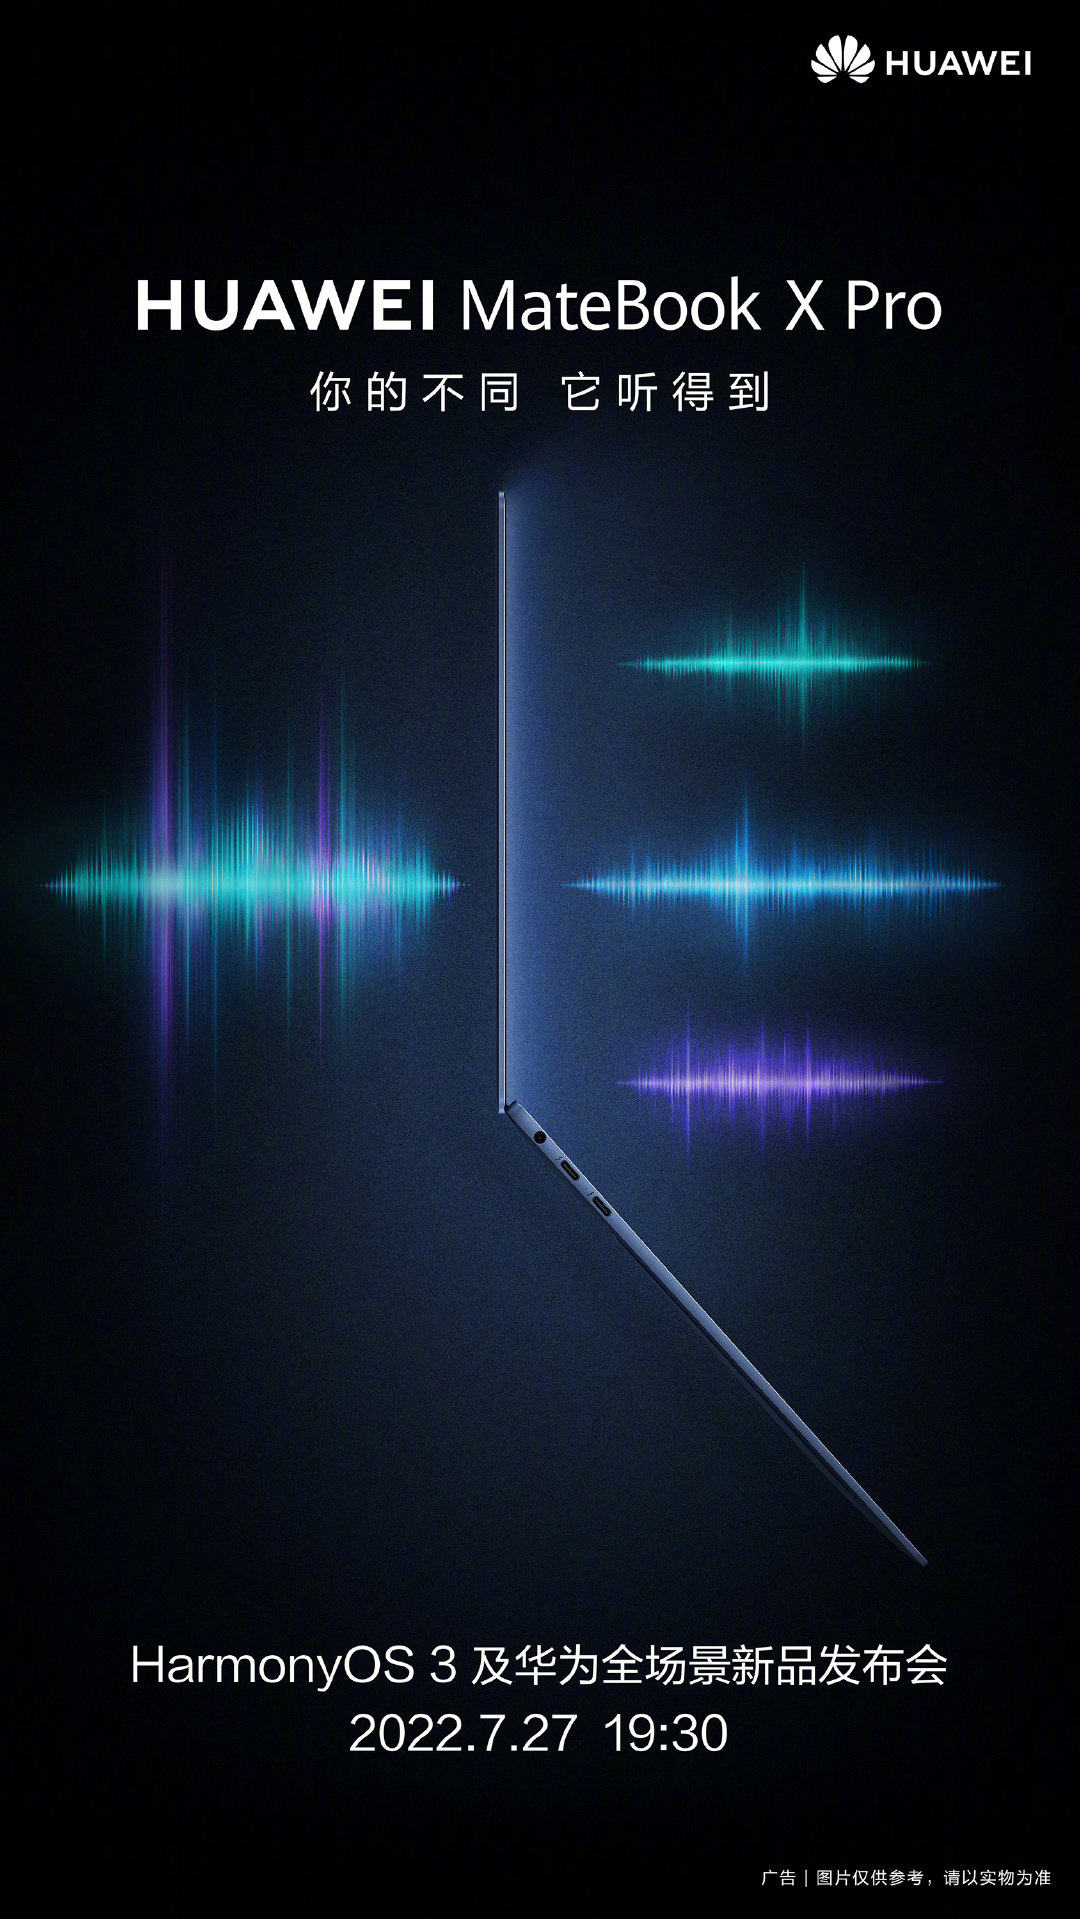 Huawei MateBook X Pro Image